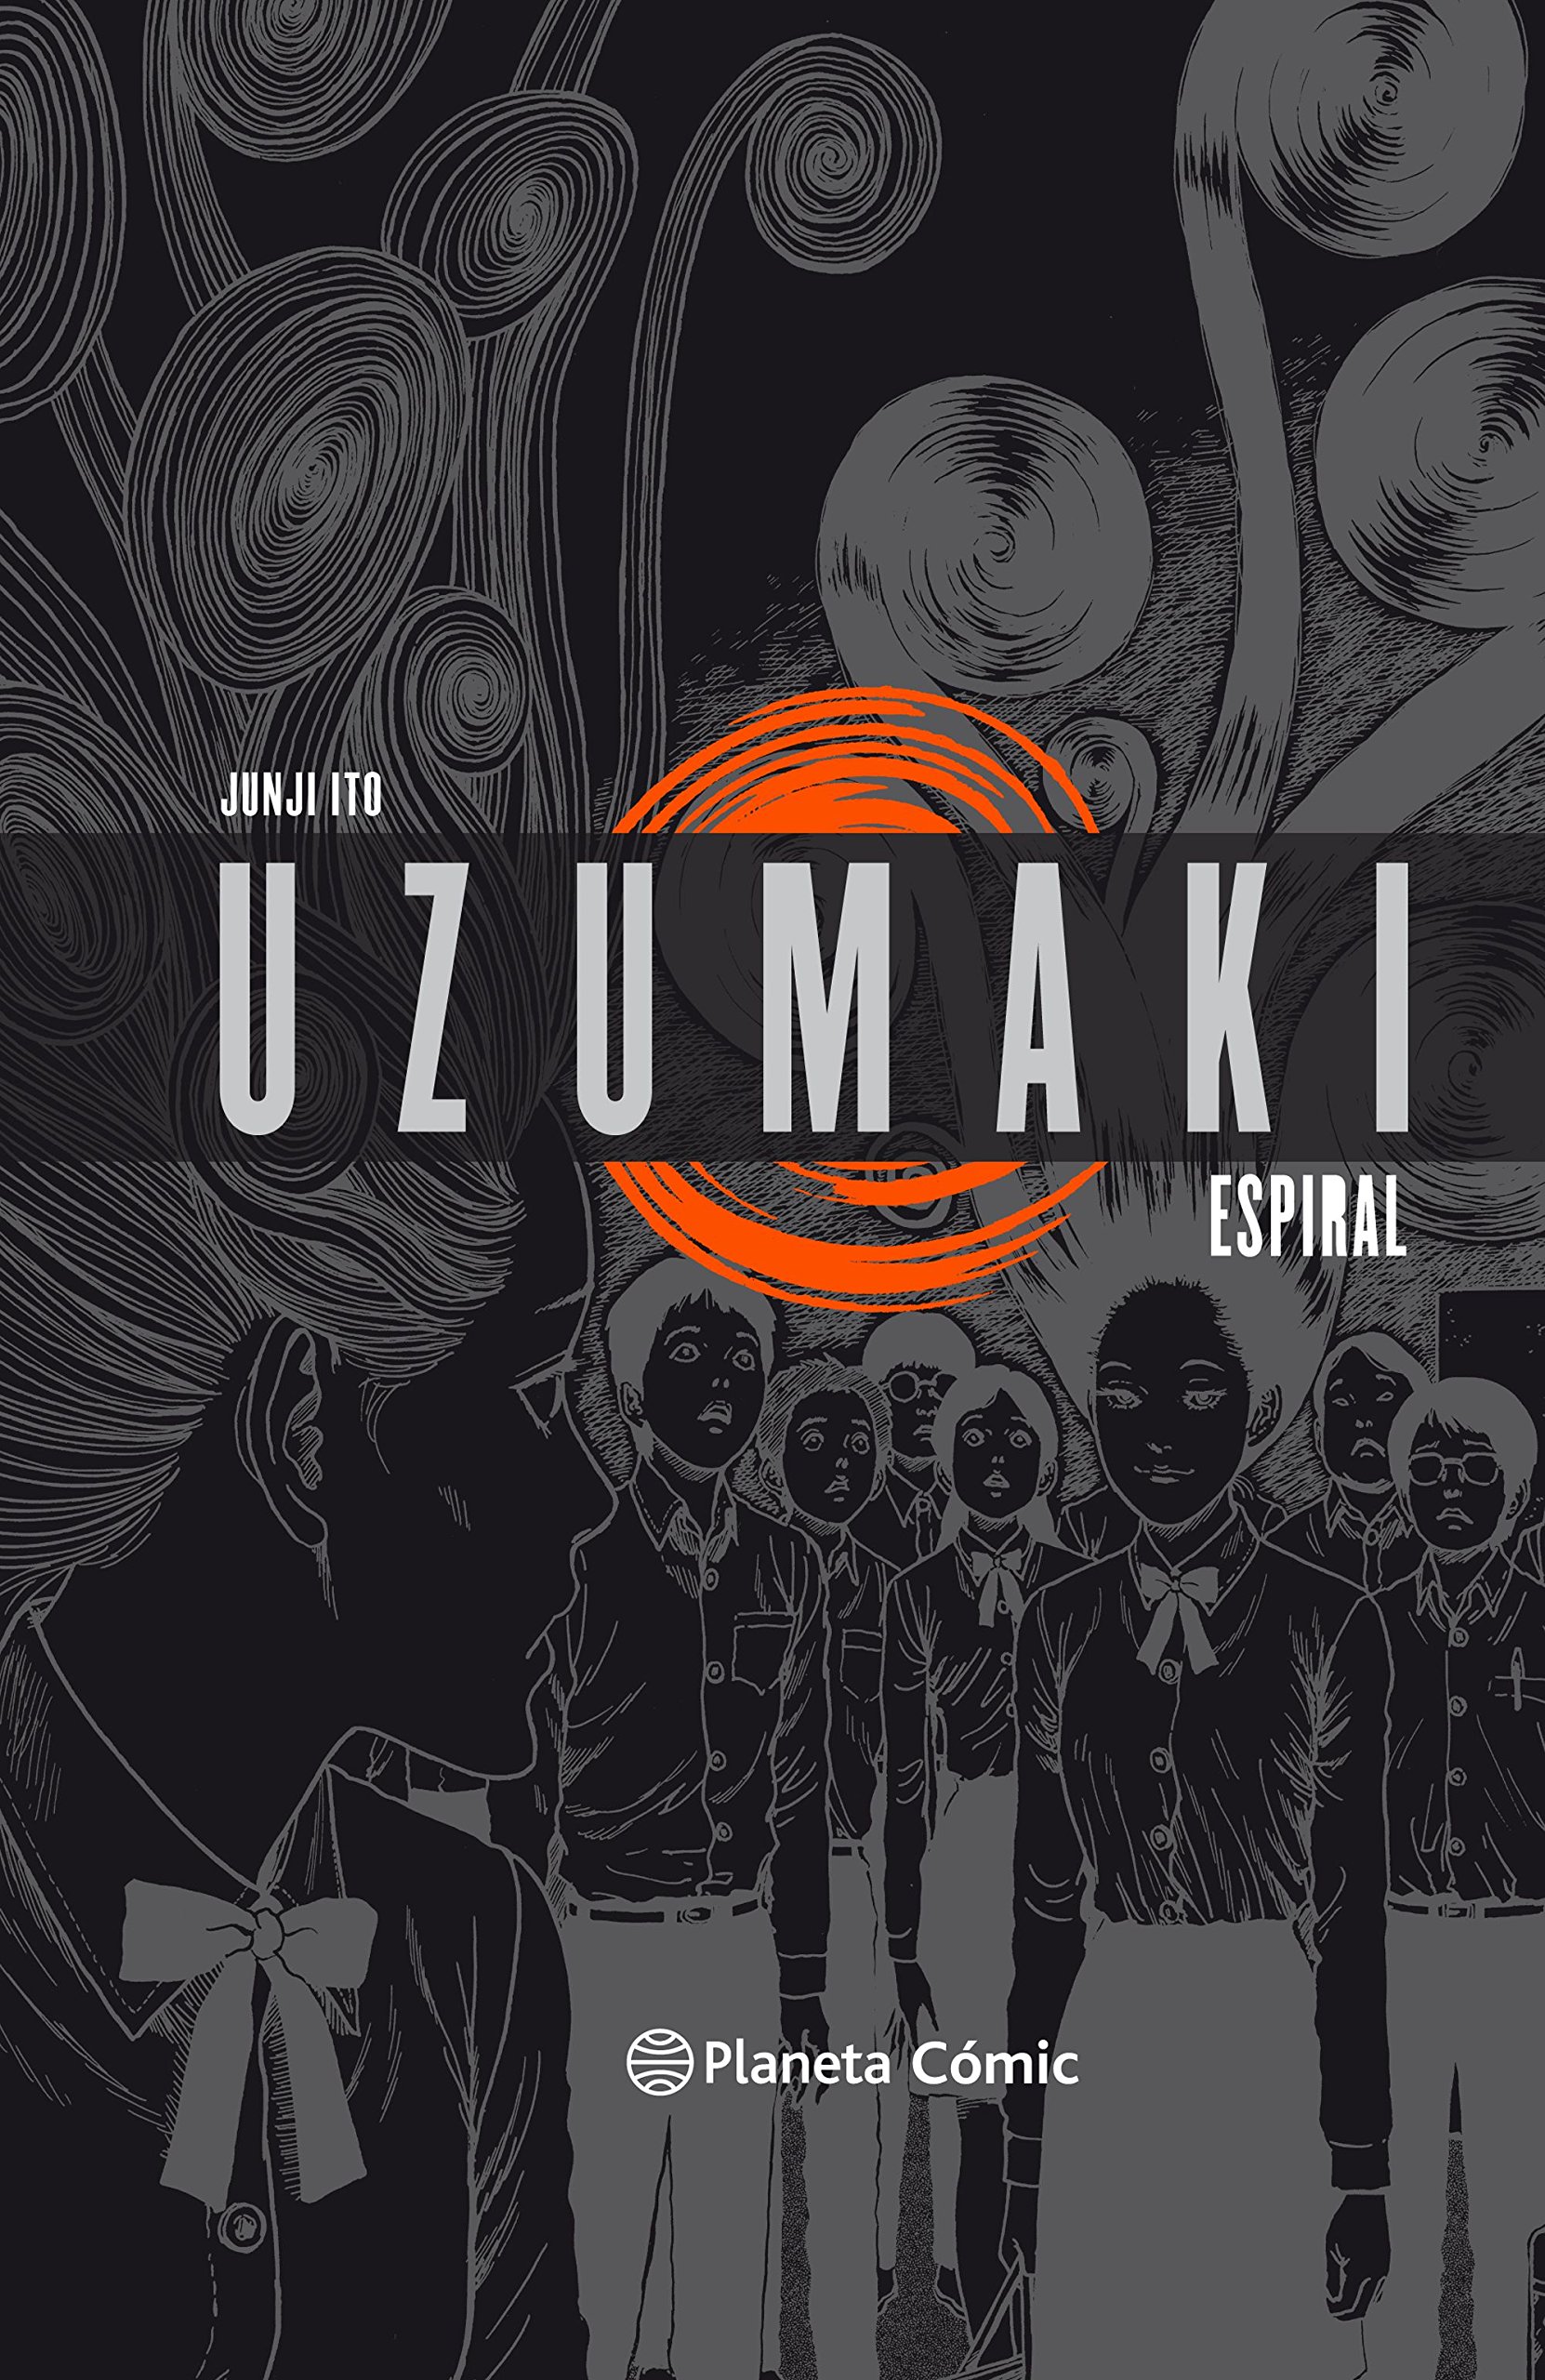 Junji Ito: Uzumaki: Espiral (GraphicNovel, Spanish language, 2017)